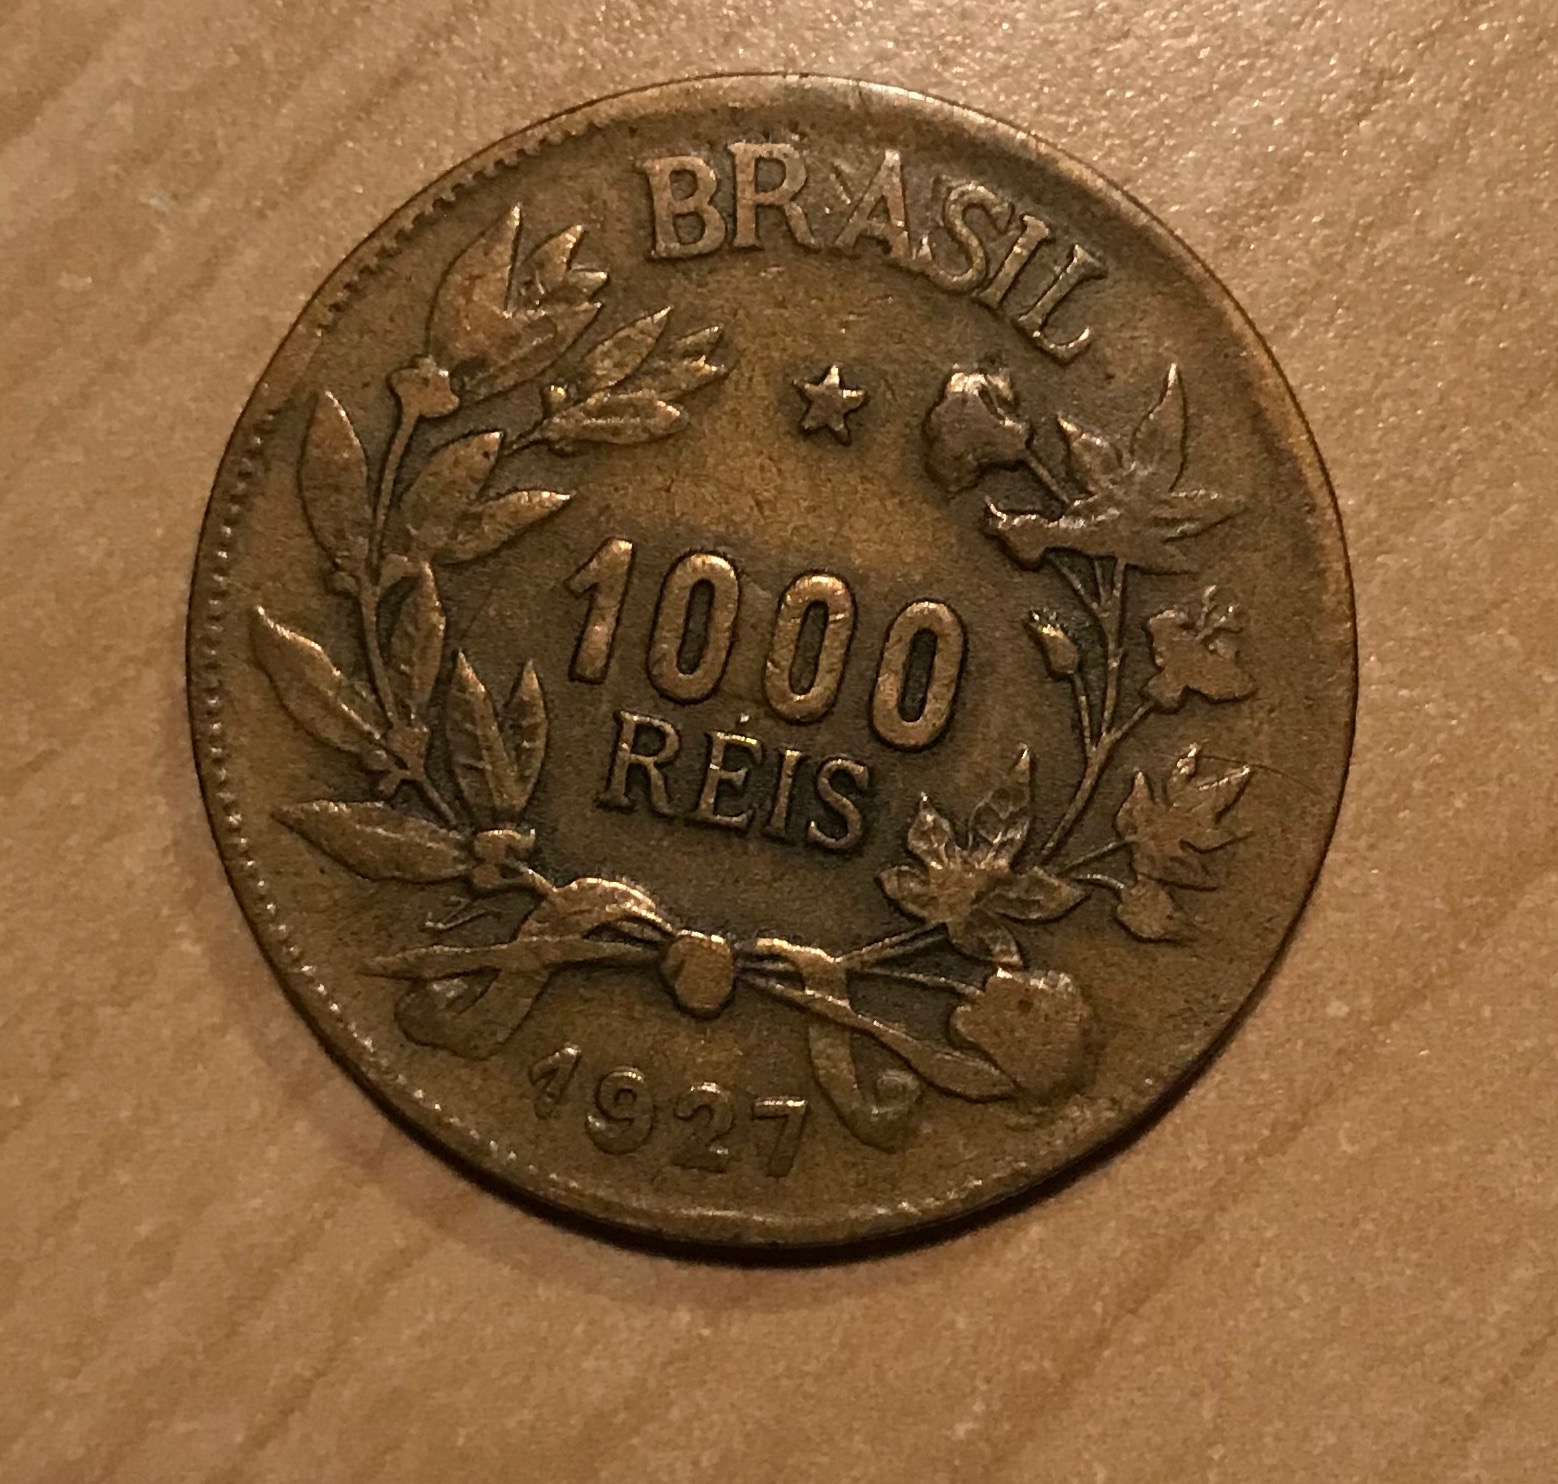 1000 reis reverse 1927